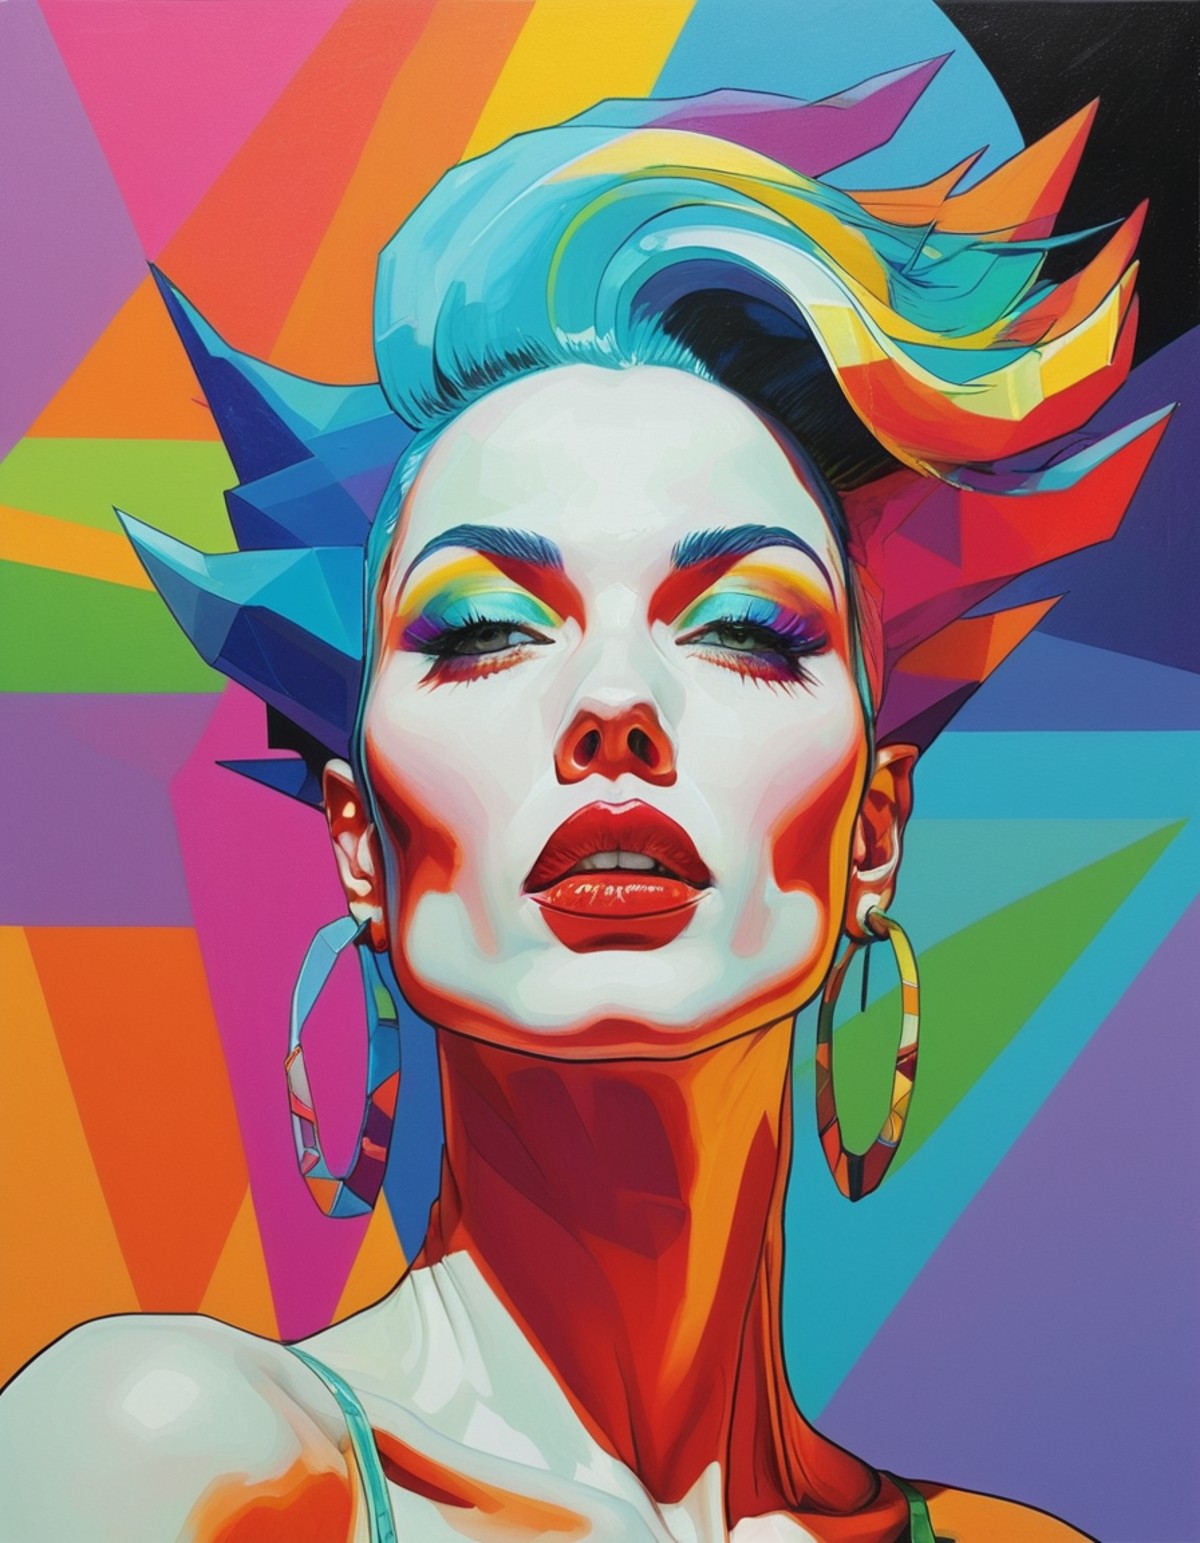 Rainbowpunk, Leonard Starr, Pure Monstrous Woman, Geometric Style, portrait art by Brian Stelfreeze